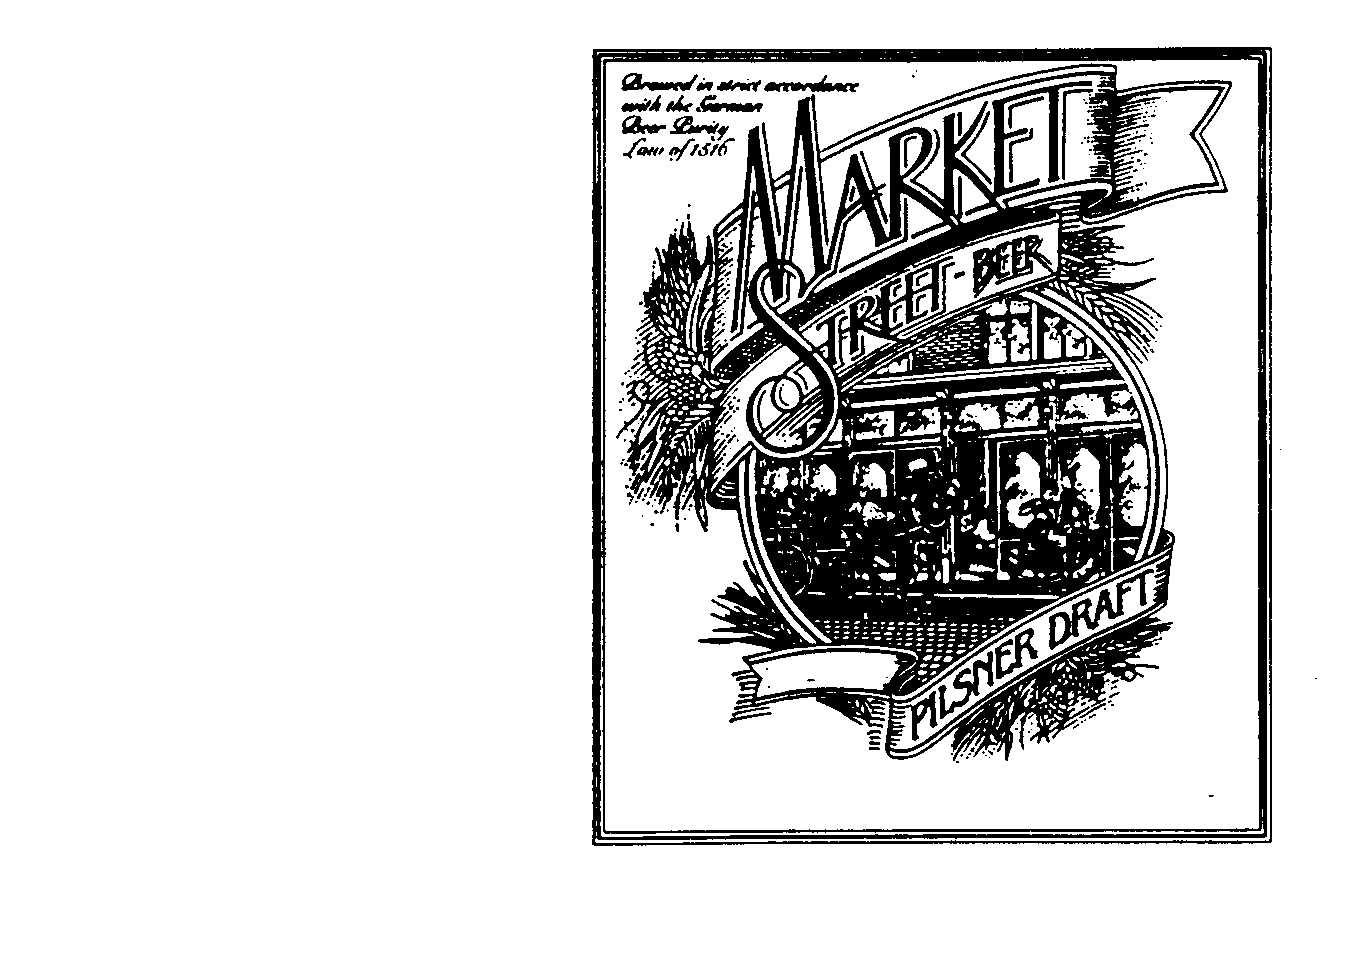  MARKET STREET-BEER BREWED IN STRICK ACCORDANCE WITH THE GERMAN BEER PURITY LAW OF 1516 PILSNER DRAFT